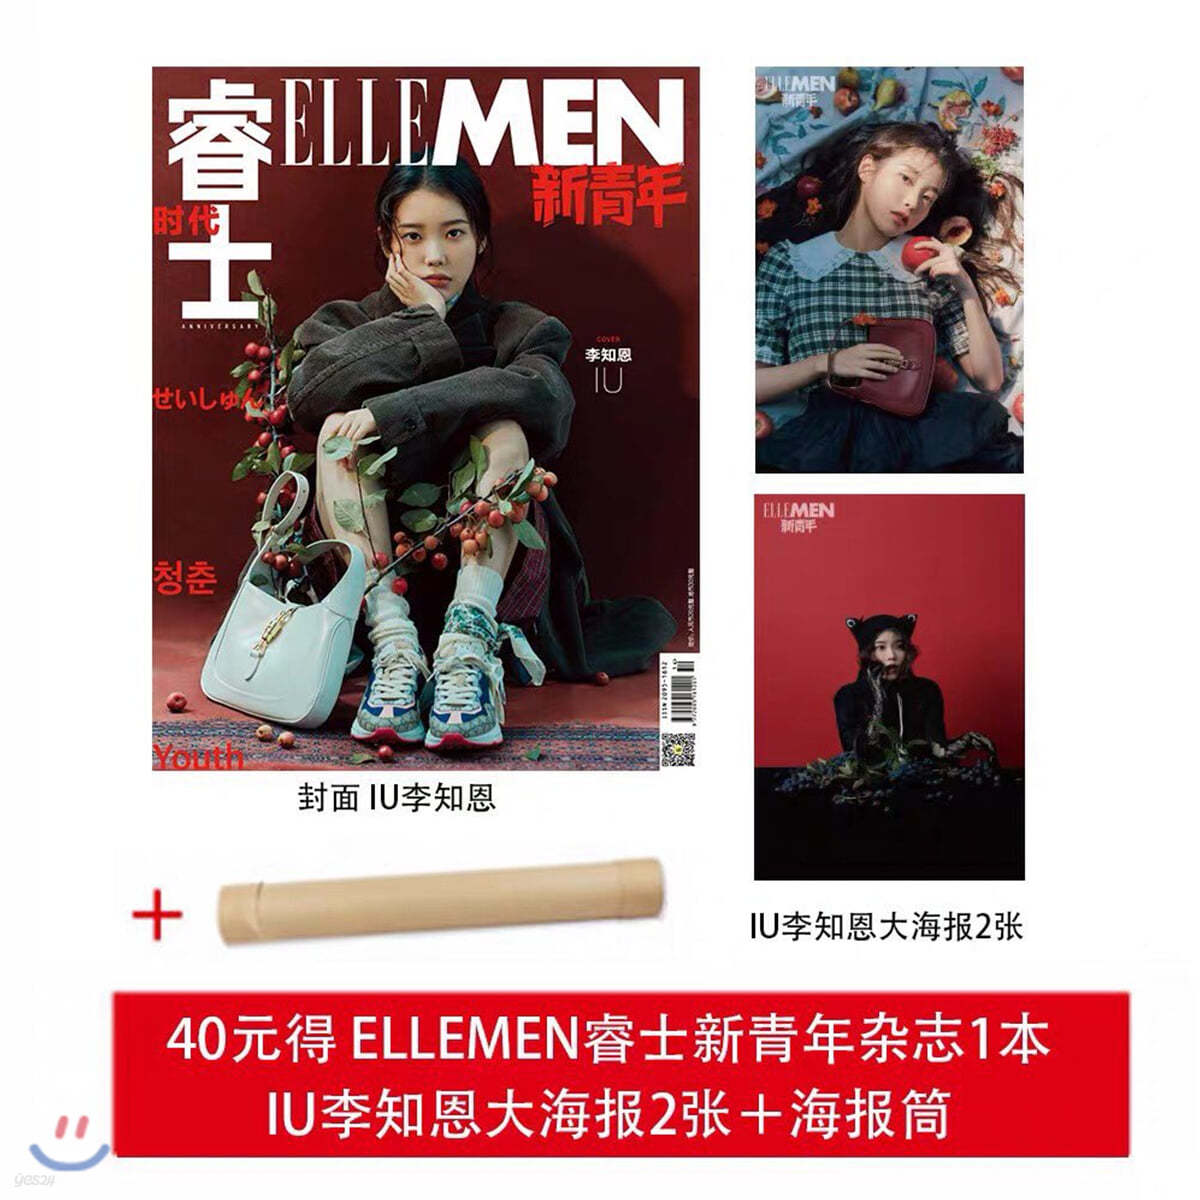 ELLE MEN (월간) : 2020년 10월호 (중국판) : 아이유 커버 (포스터 2장 / 지관통)